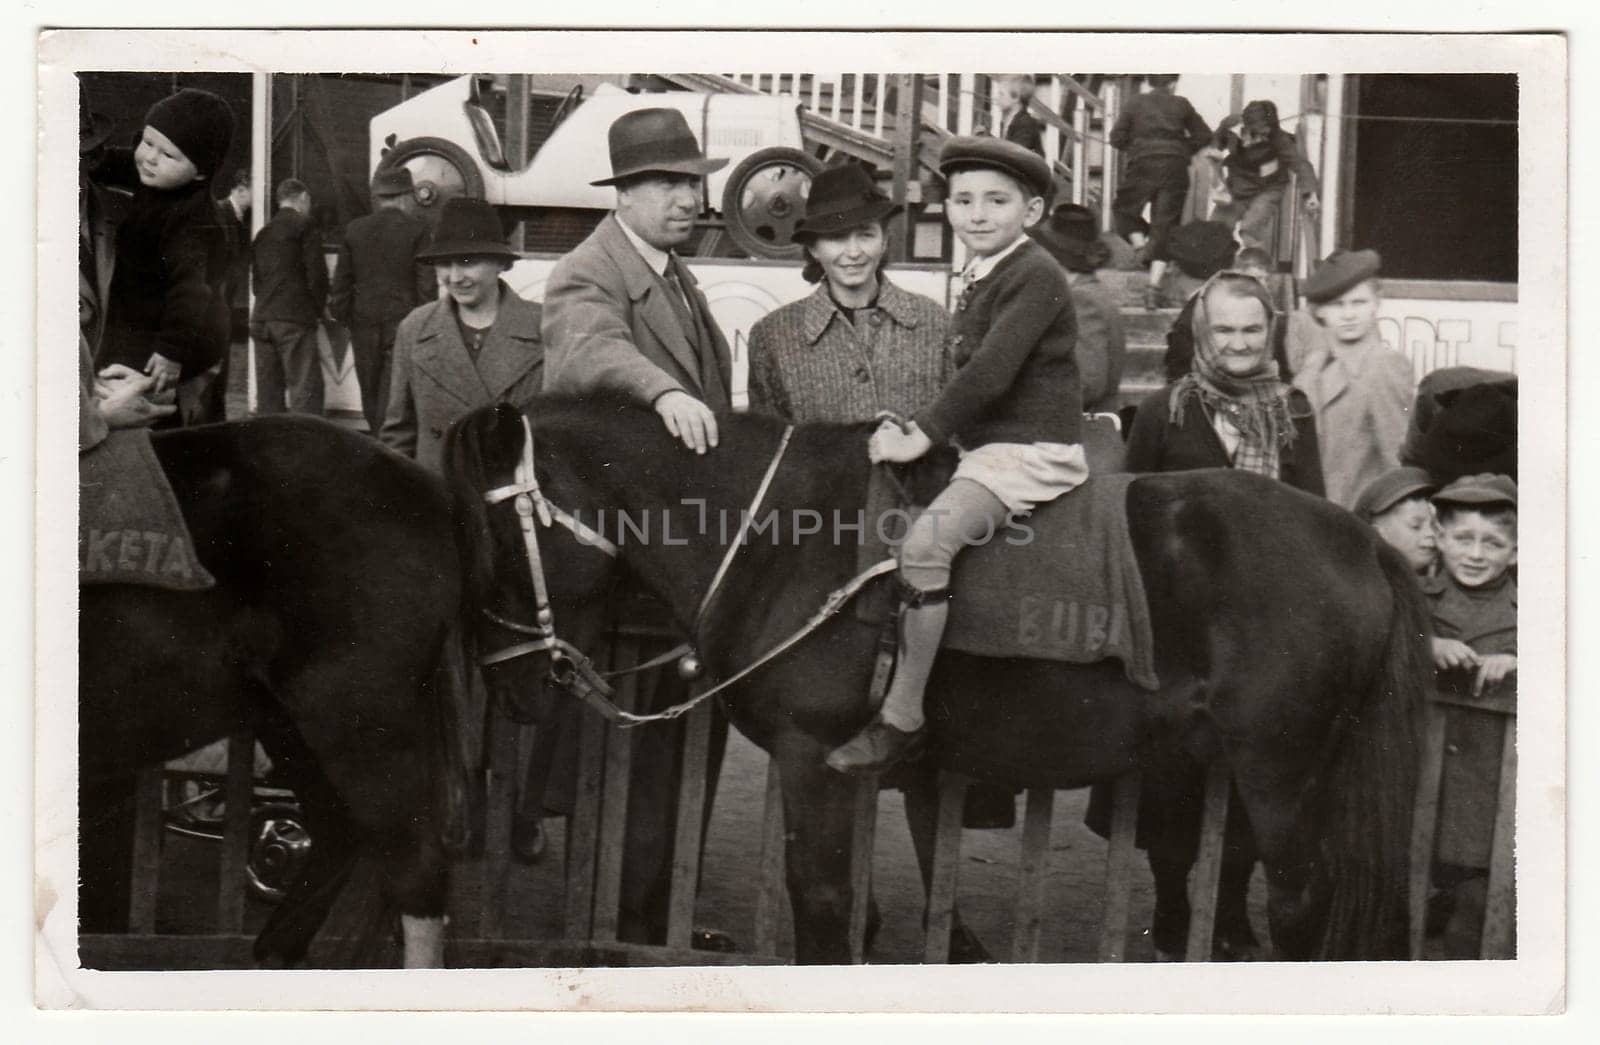 THE CZECHOSLOVAK SOCIALIST REPUBLIC - CIRCA 1950s: Vintage photo shows family in amusement park. A small boy sits on horse.